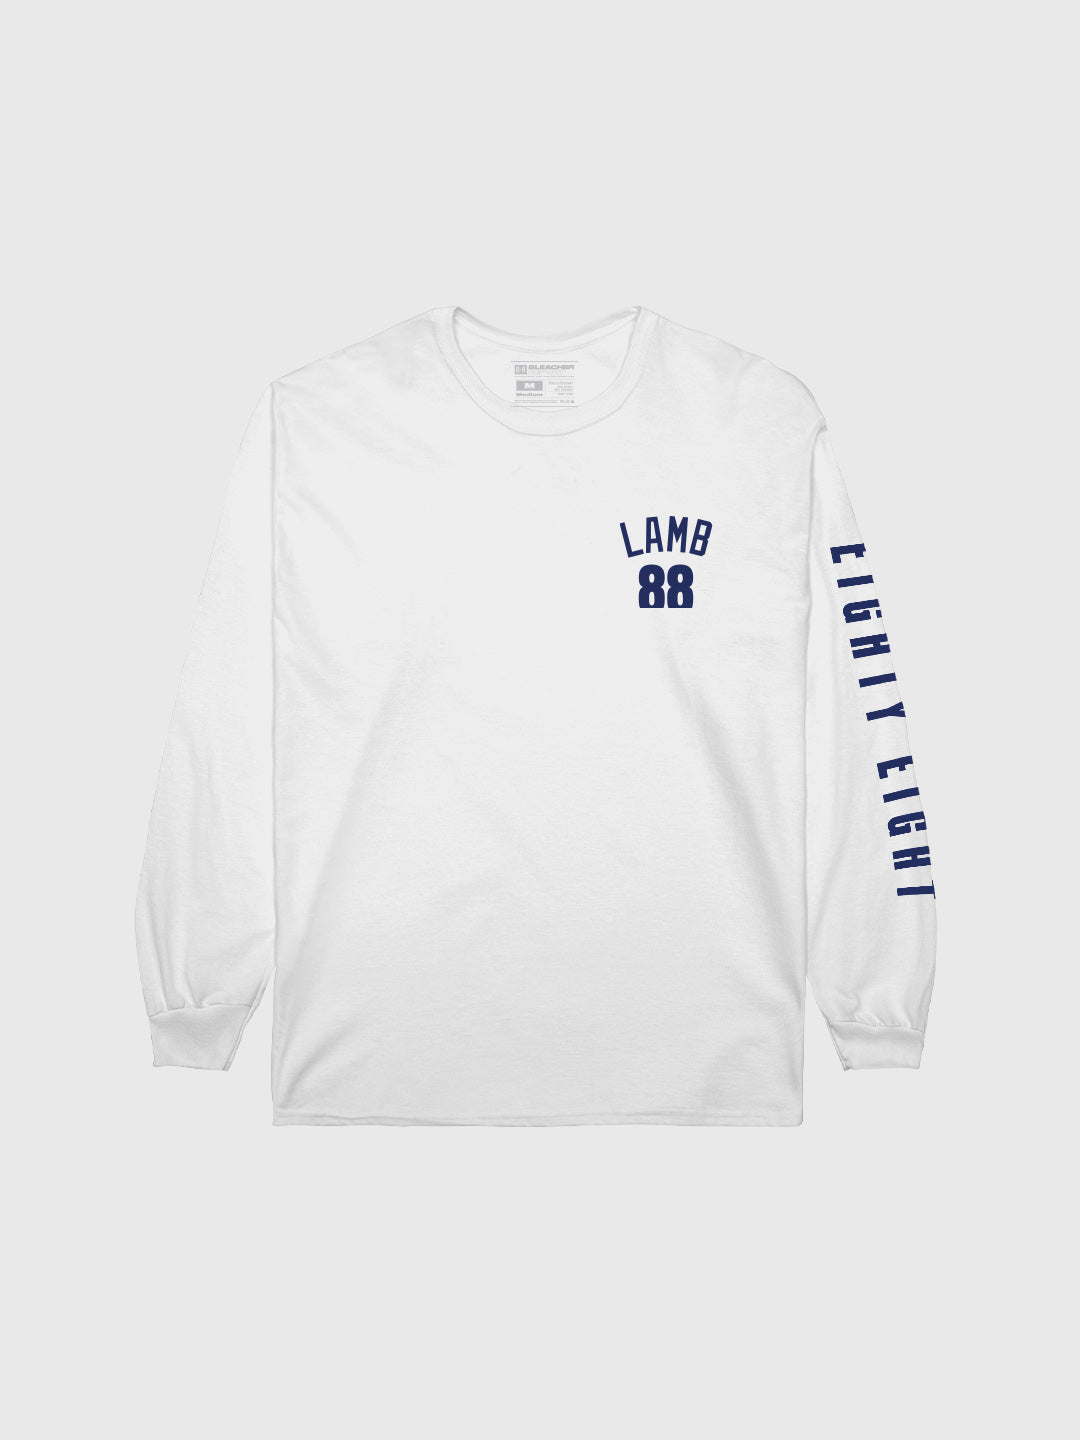 CeeDee Lamb #88 Long Sleeve T-Shirt